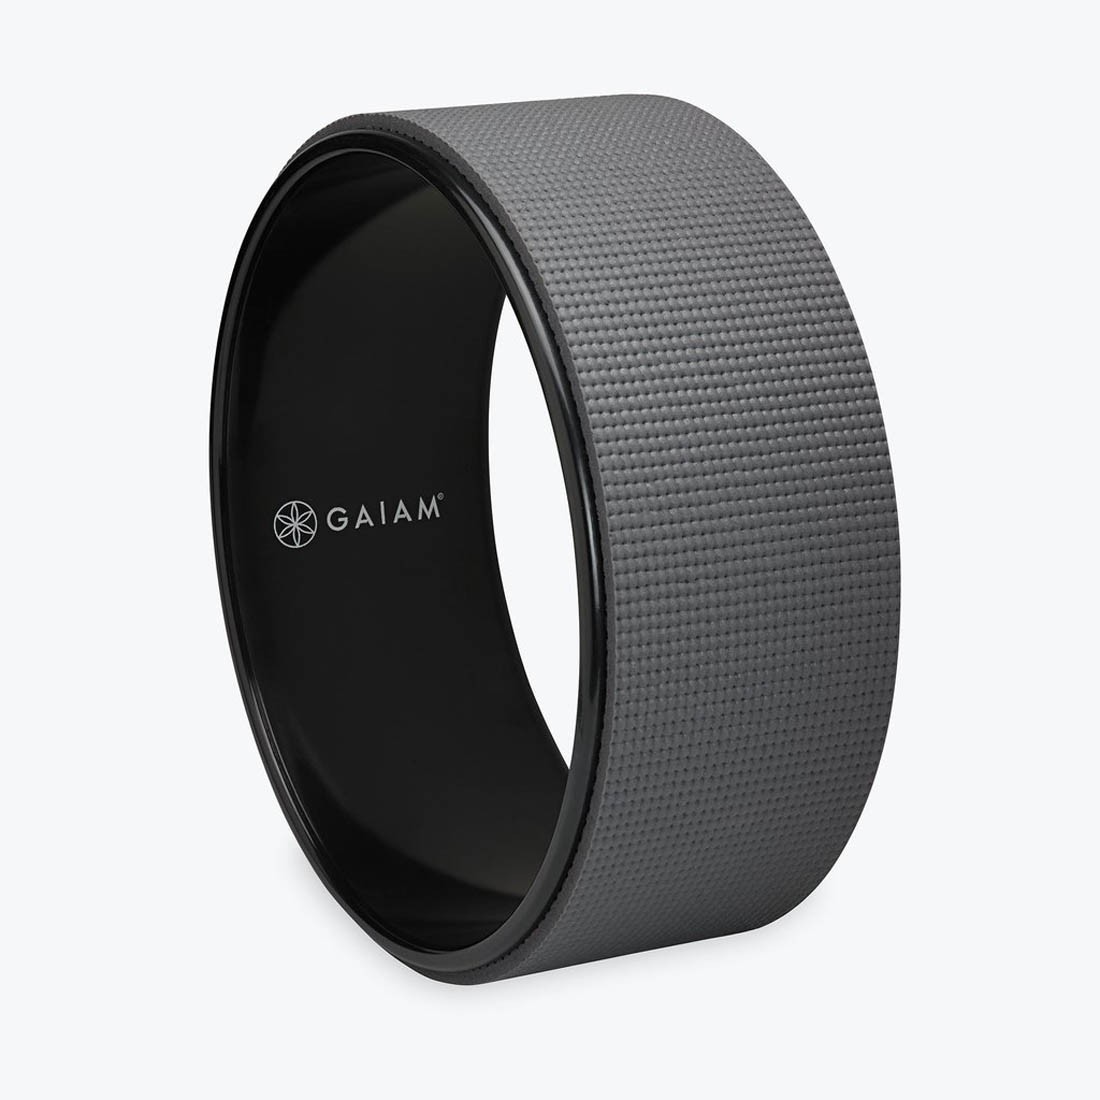 Buy GAIAM Eco Yoga Wheel Granite - GAIAM, delivered to your home